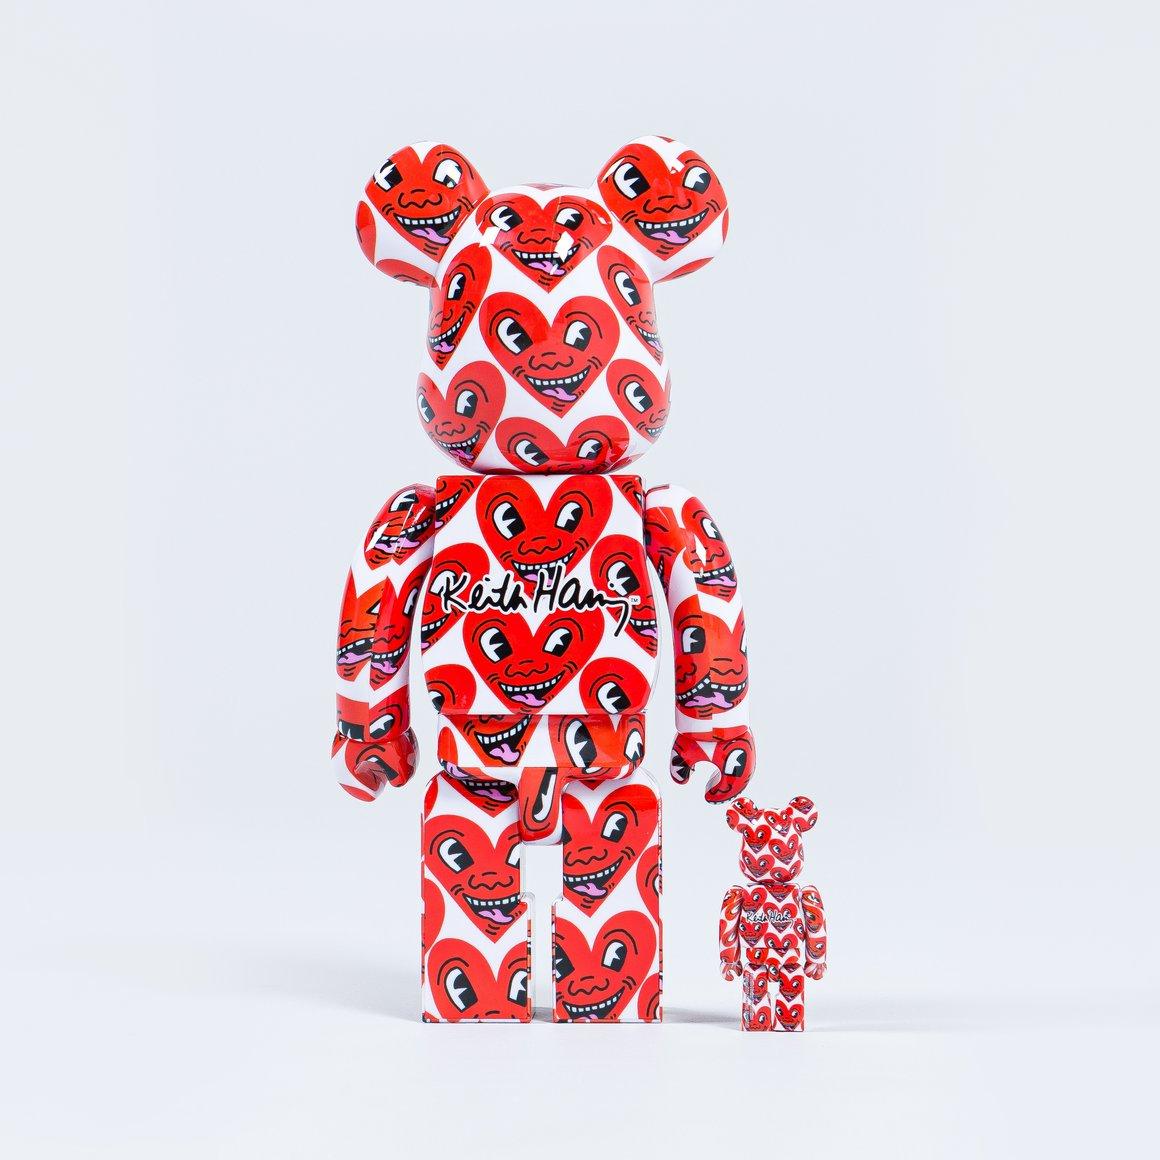 BEARBRICK KEITH HARING 400% &100% Medicom Toy Japan Vinyl figure POP ART - Modern Sculpture by (after) Keith Haring